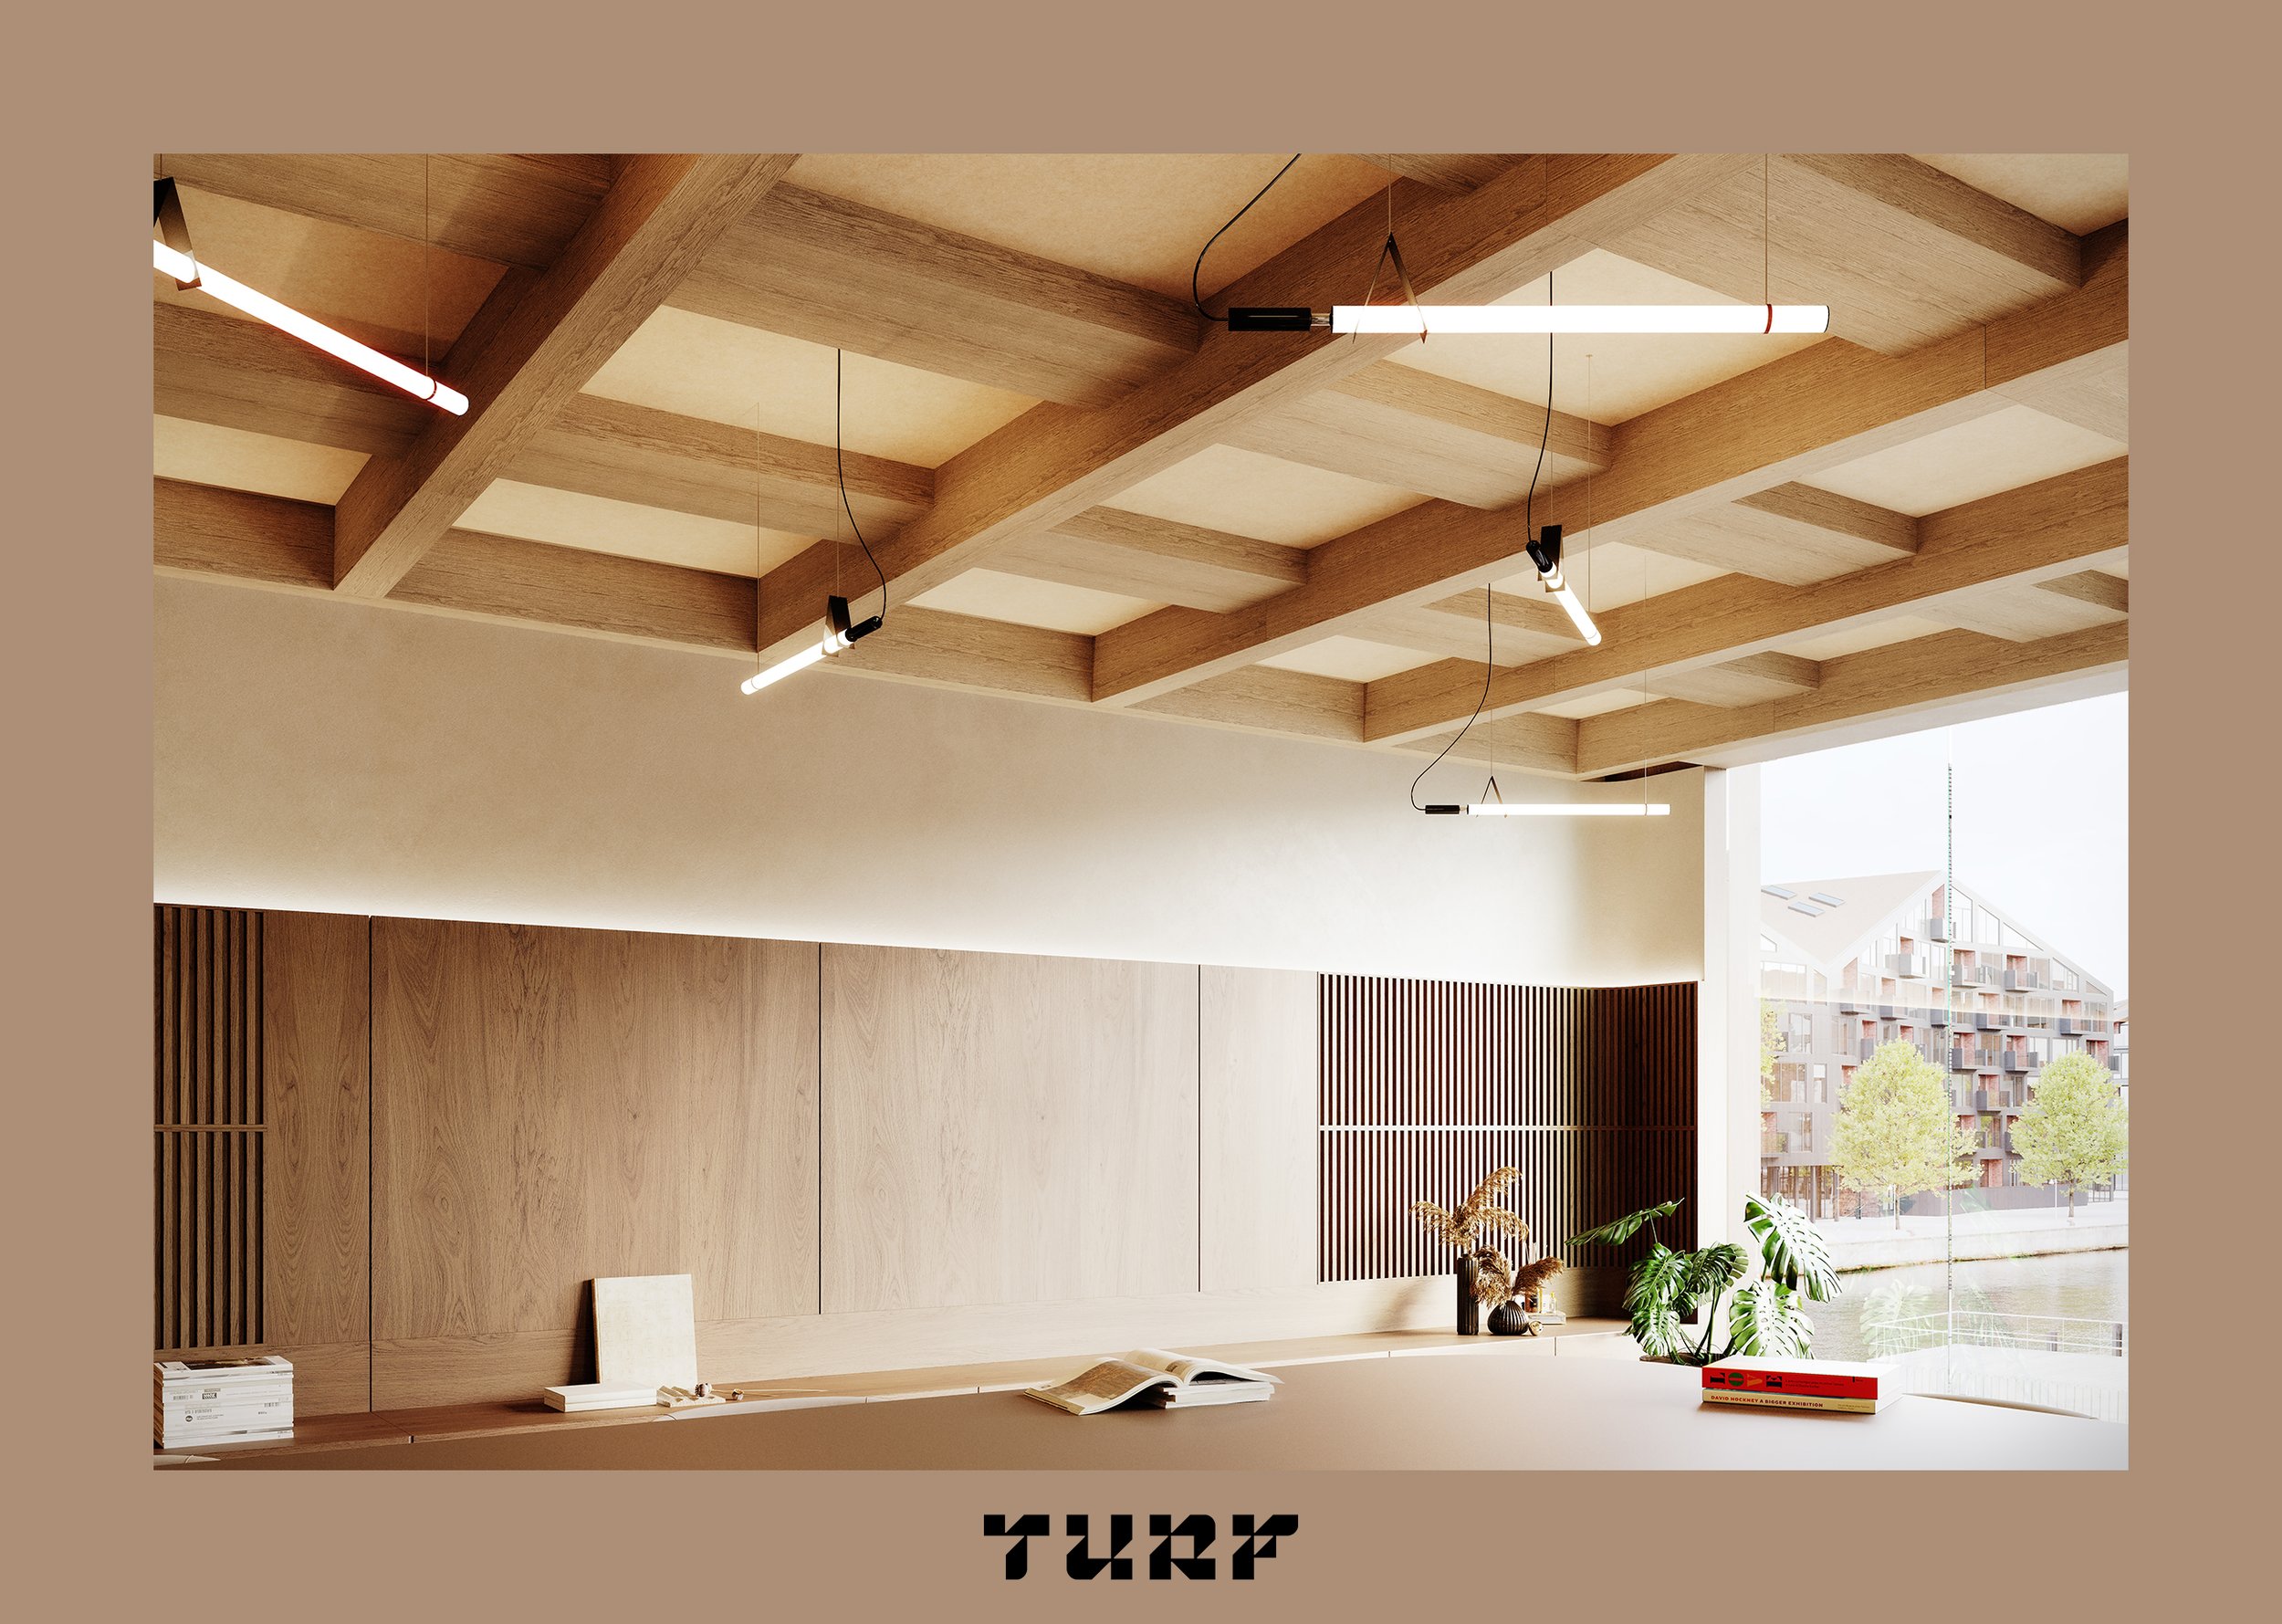   PRODUCT* TURF design (US)  Plaid ceiling baffle images: © imperfct* 